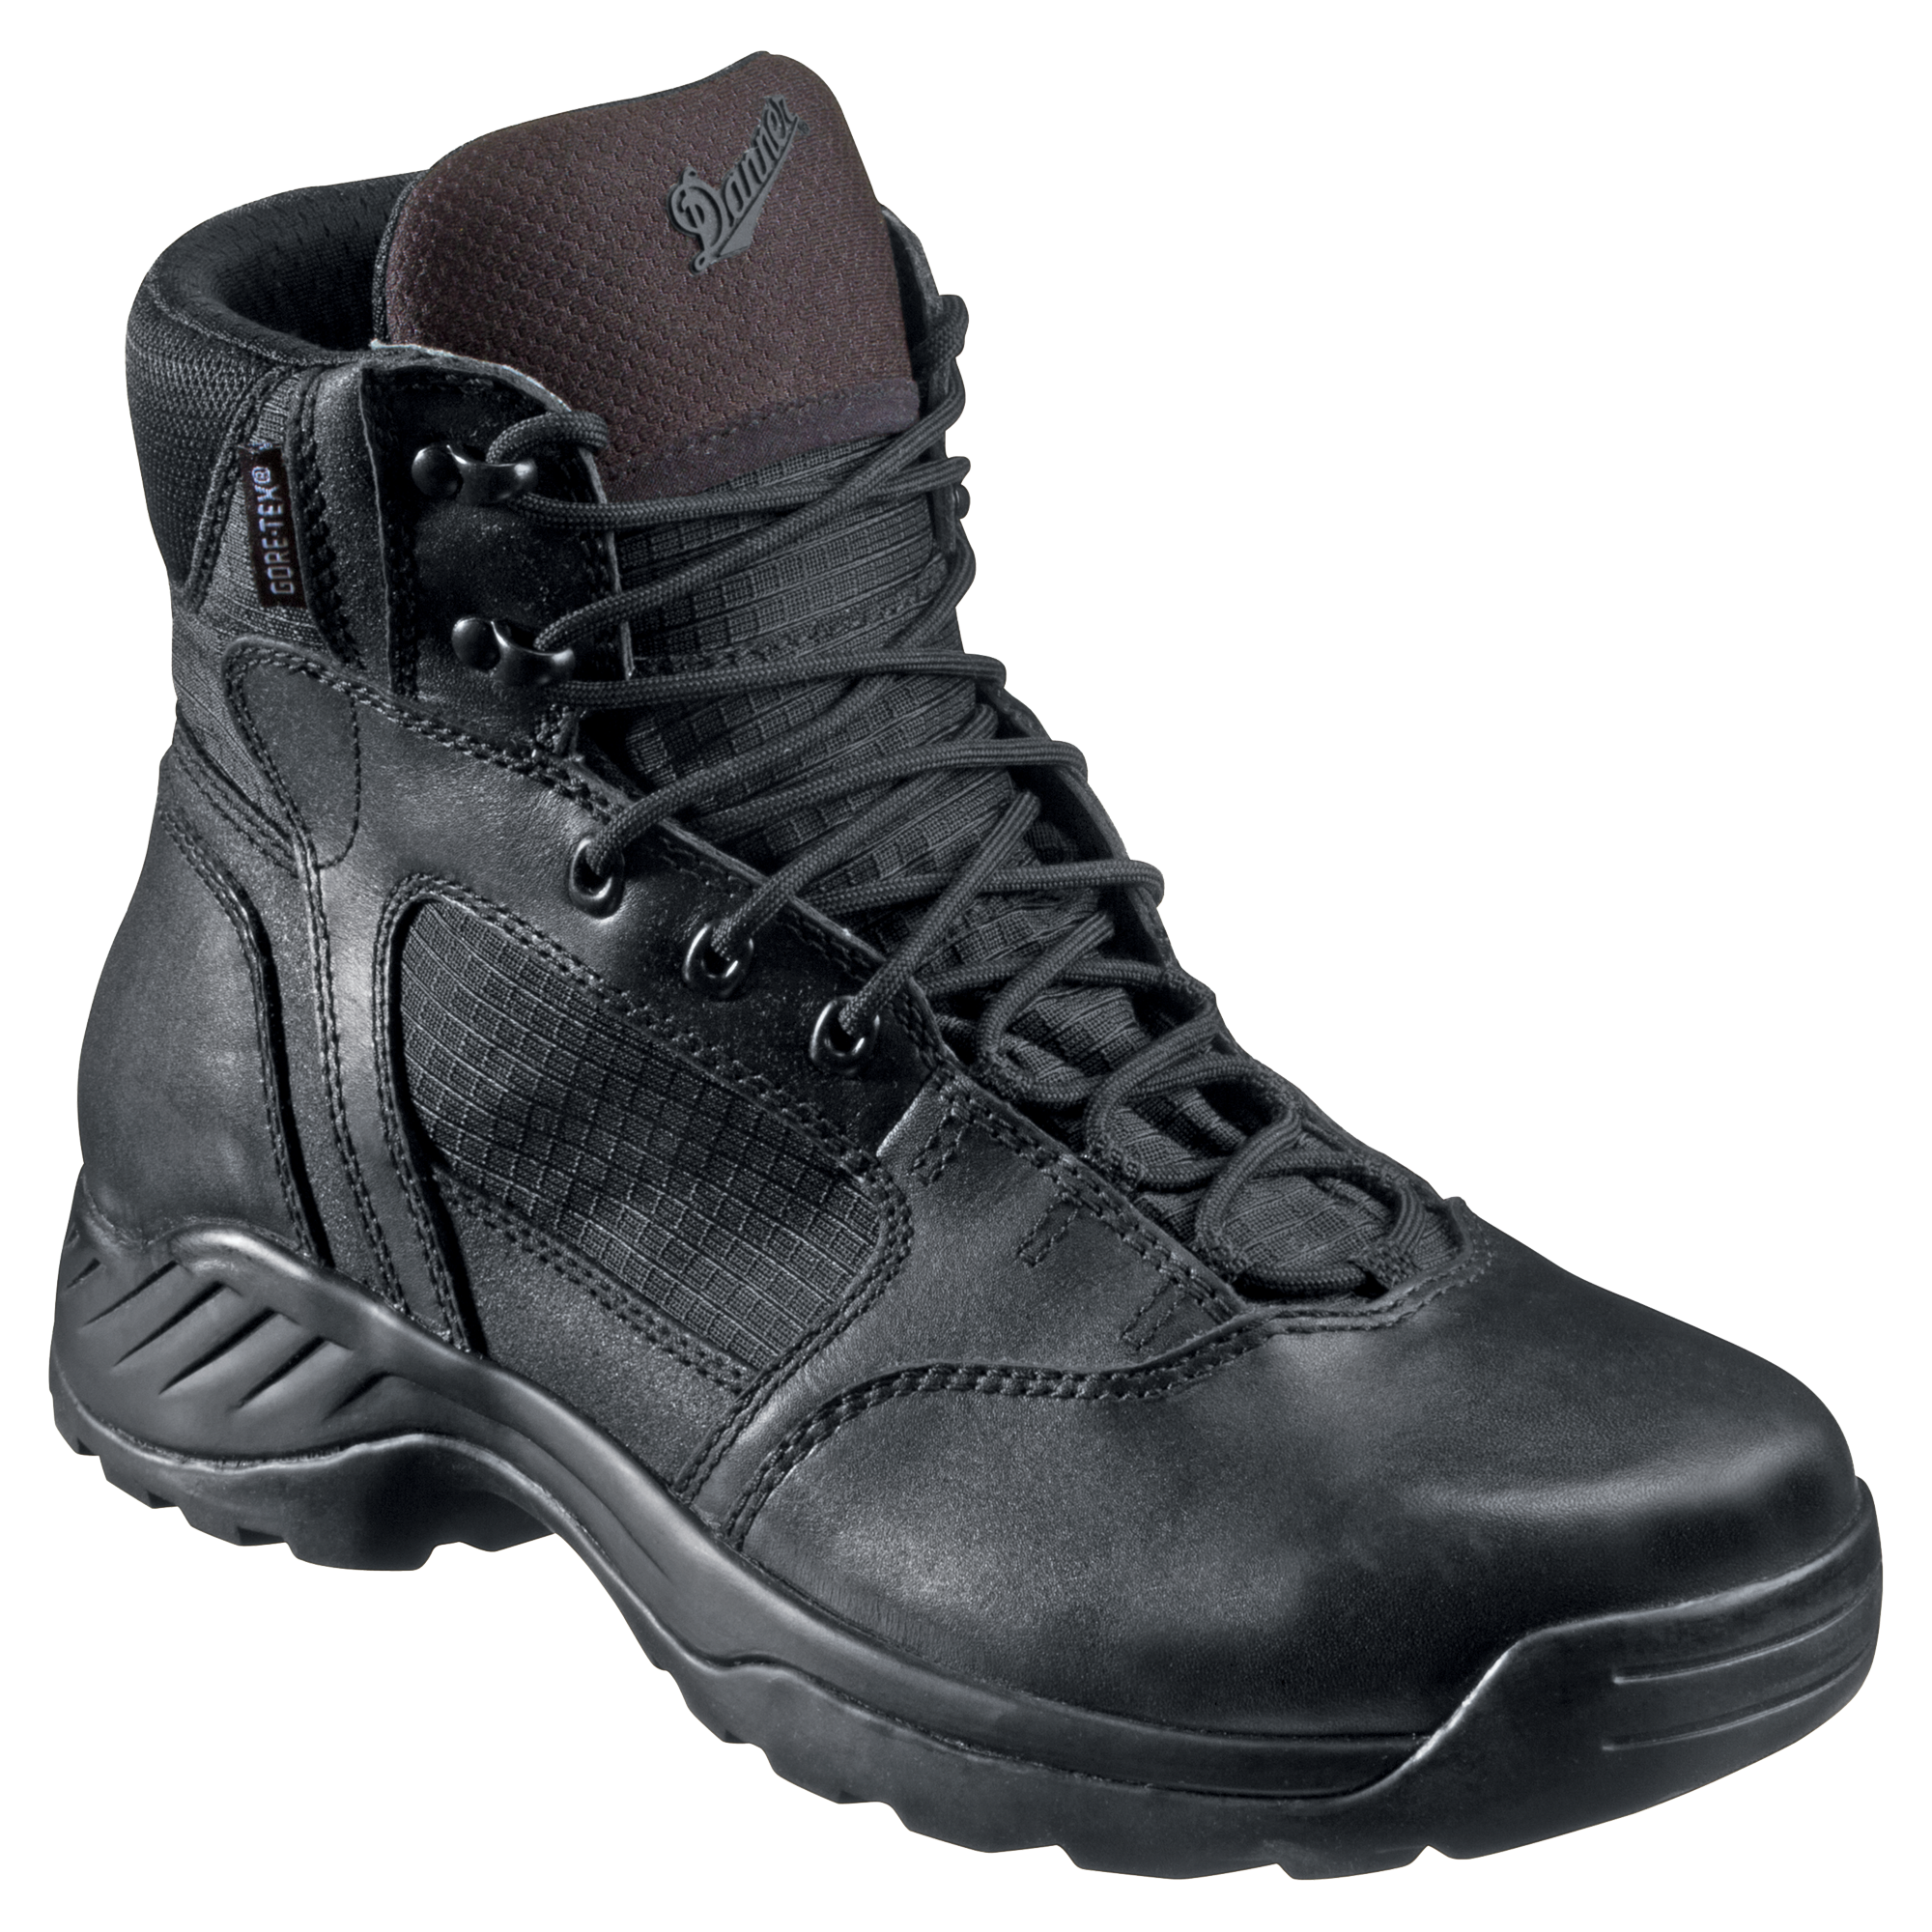 Danner Kinetic Side-Zip GORE-TEX Work Boots for Men - Black - 15M